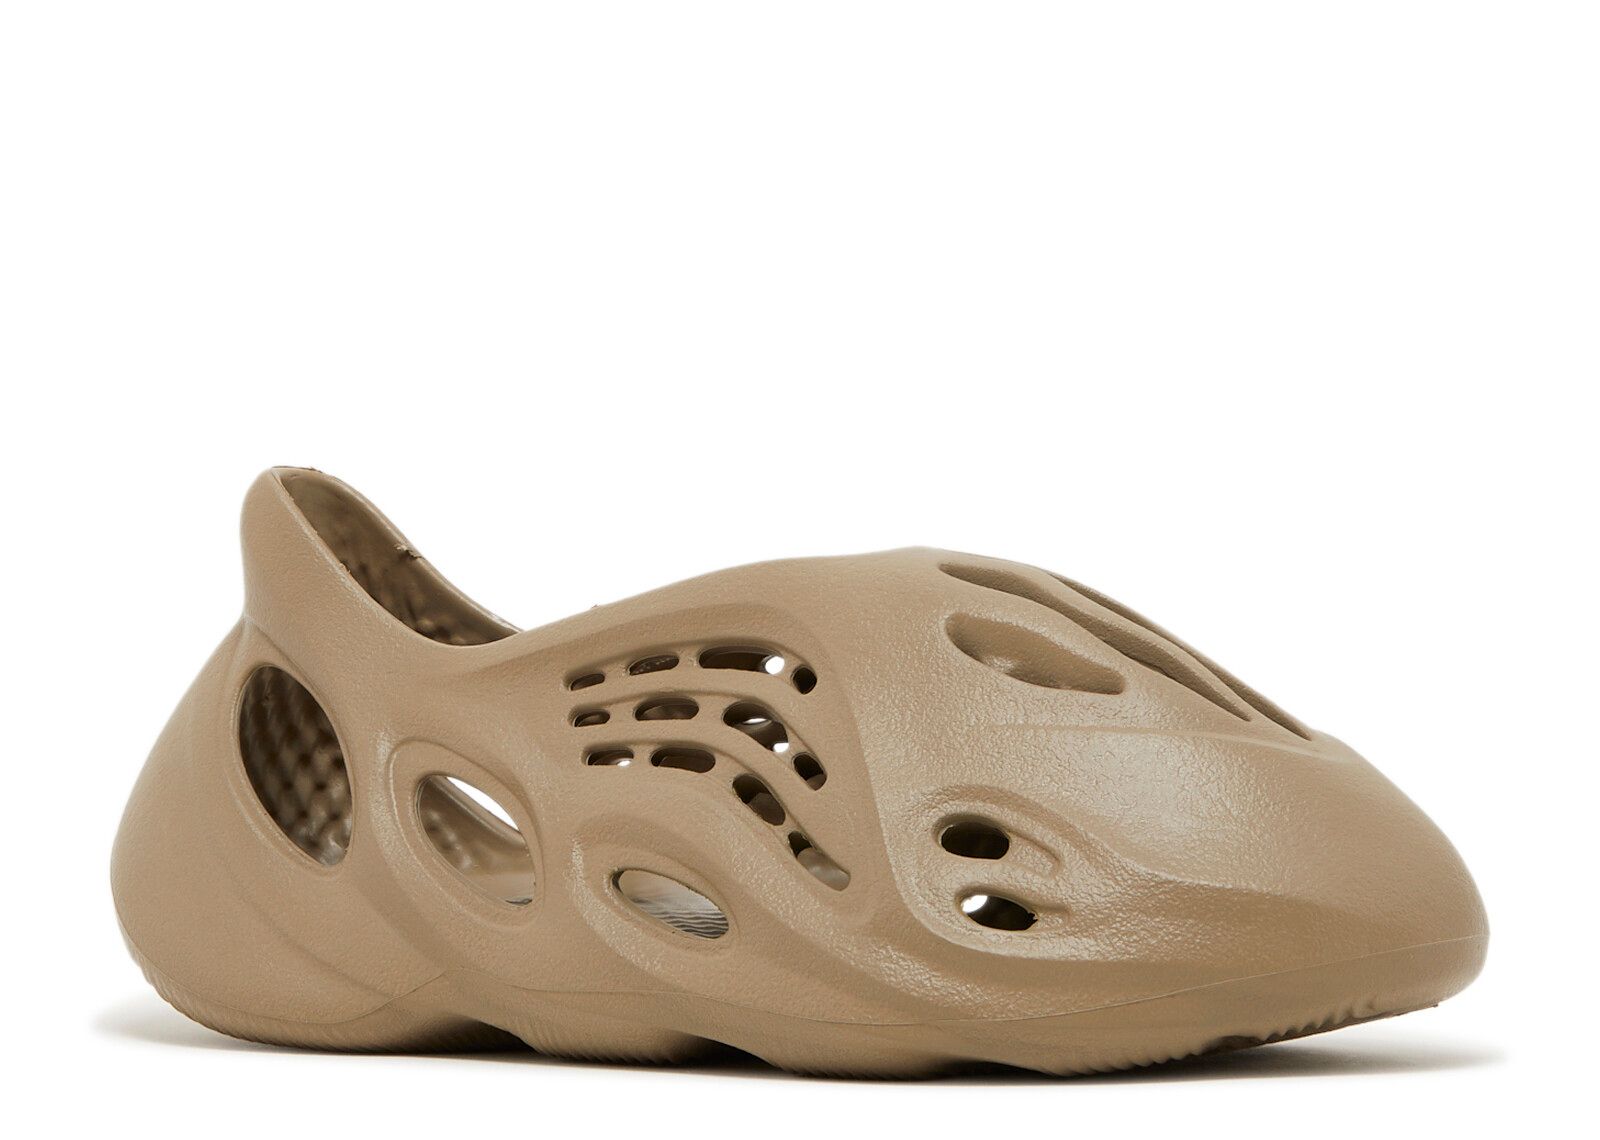 Yeezy Foam Runner 'Stone Taupe' - Adidas - ID4752 - stone taupe/stone ...